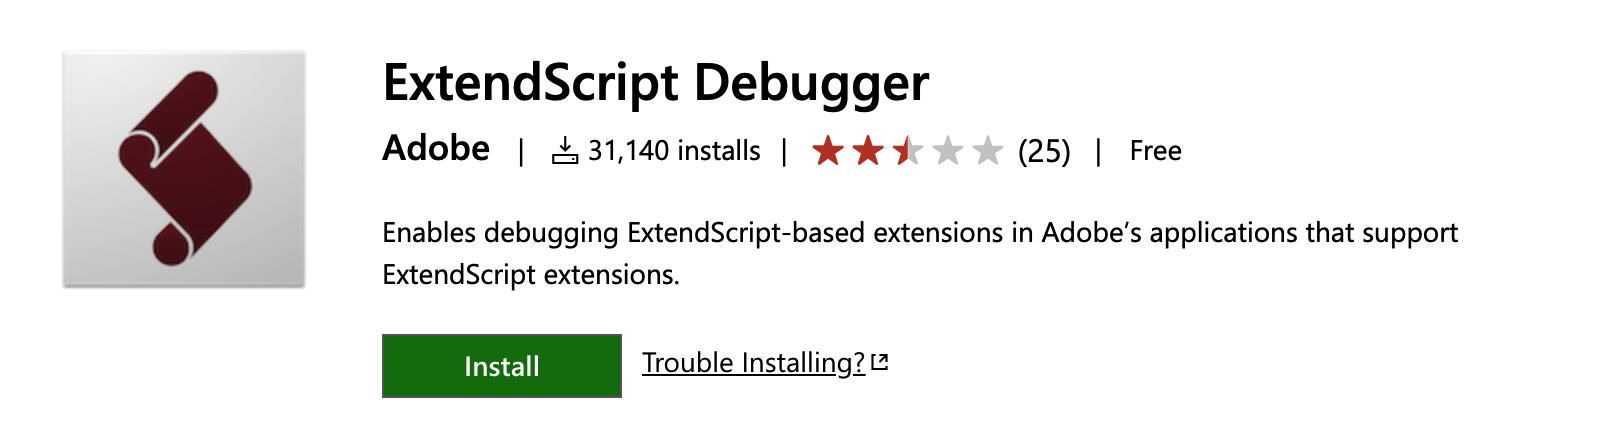 ExtendScript Debugger